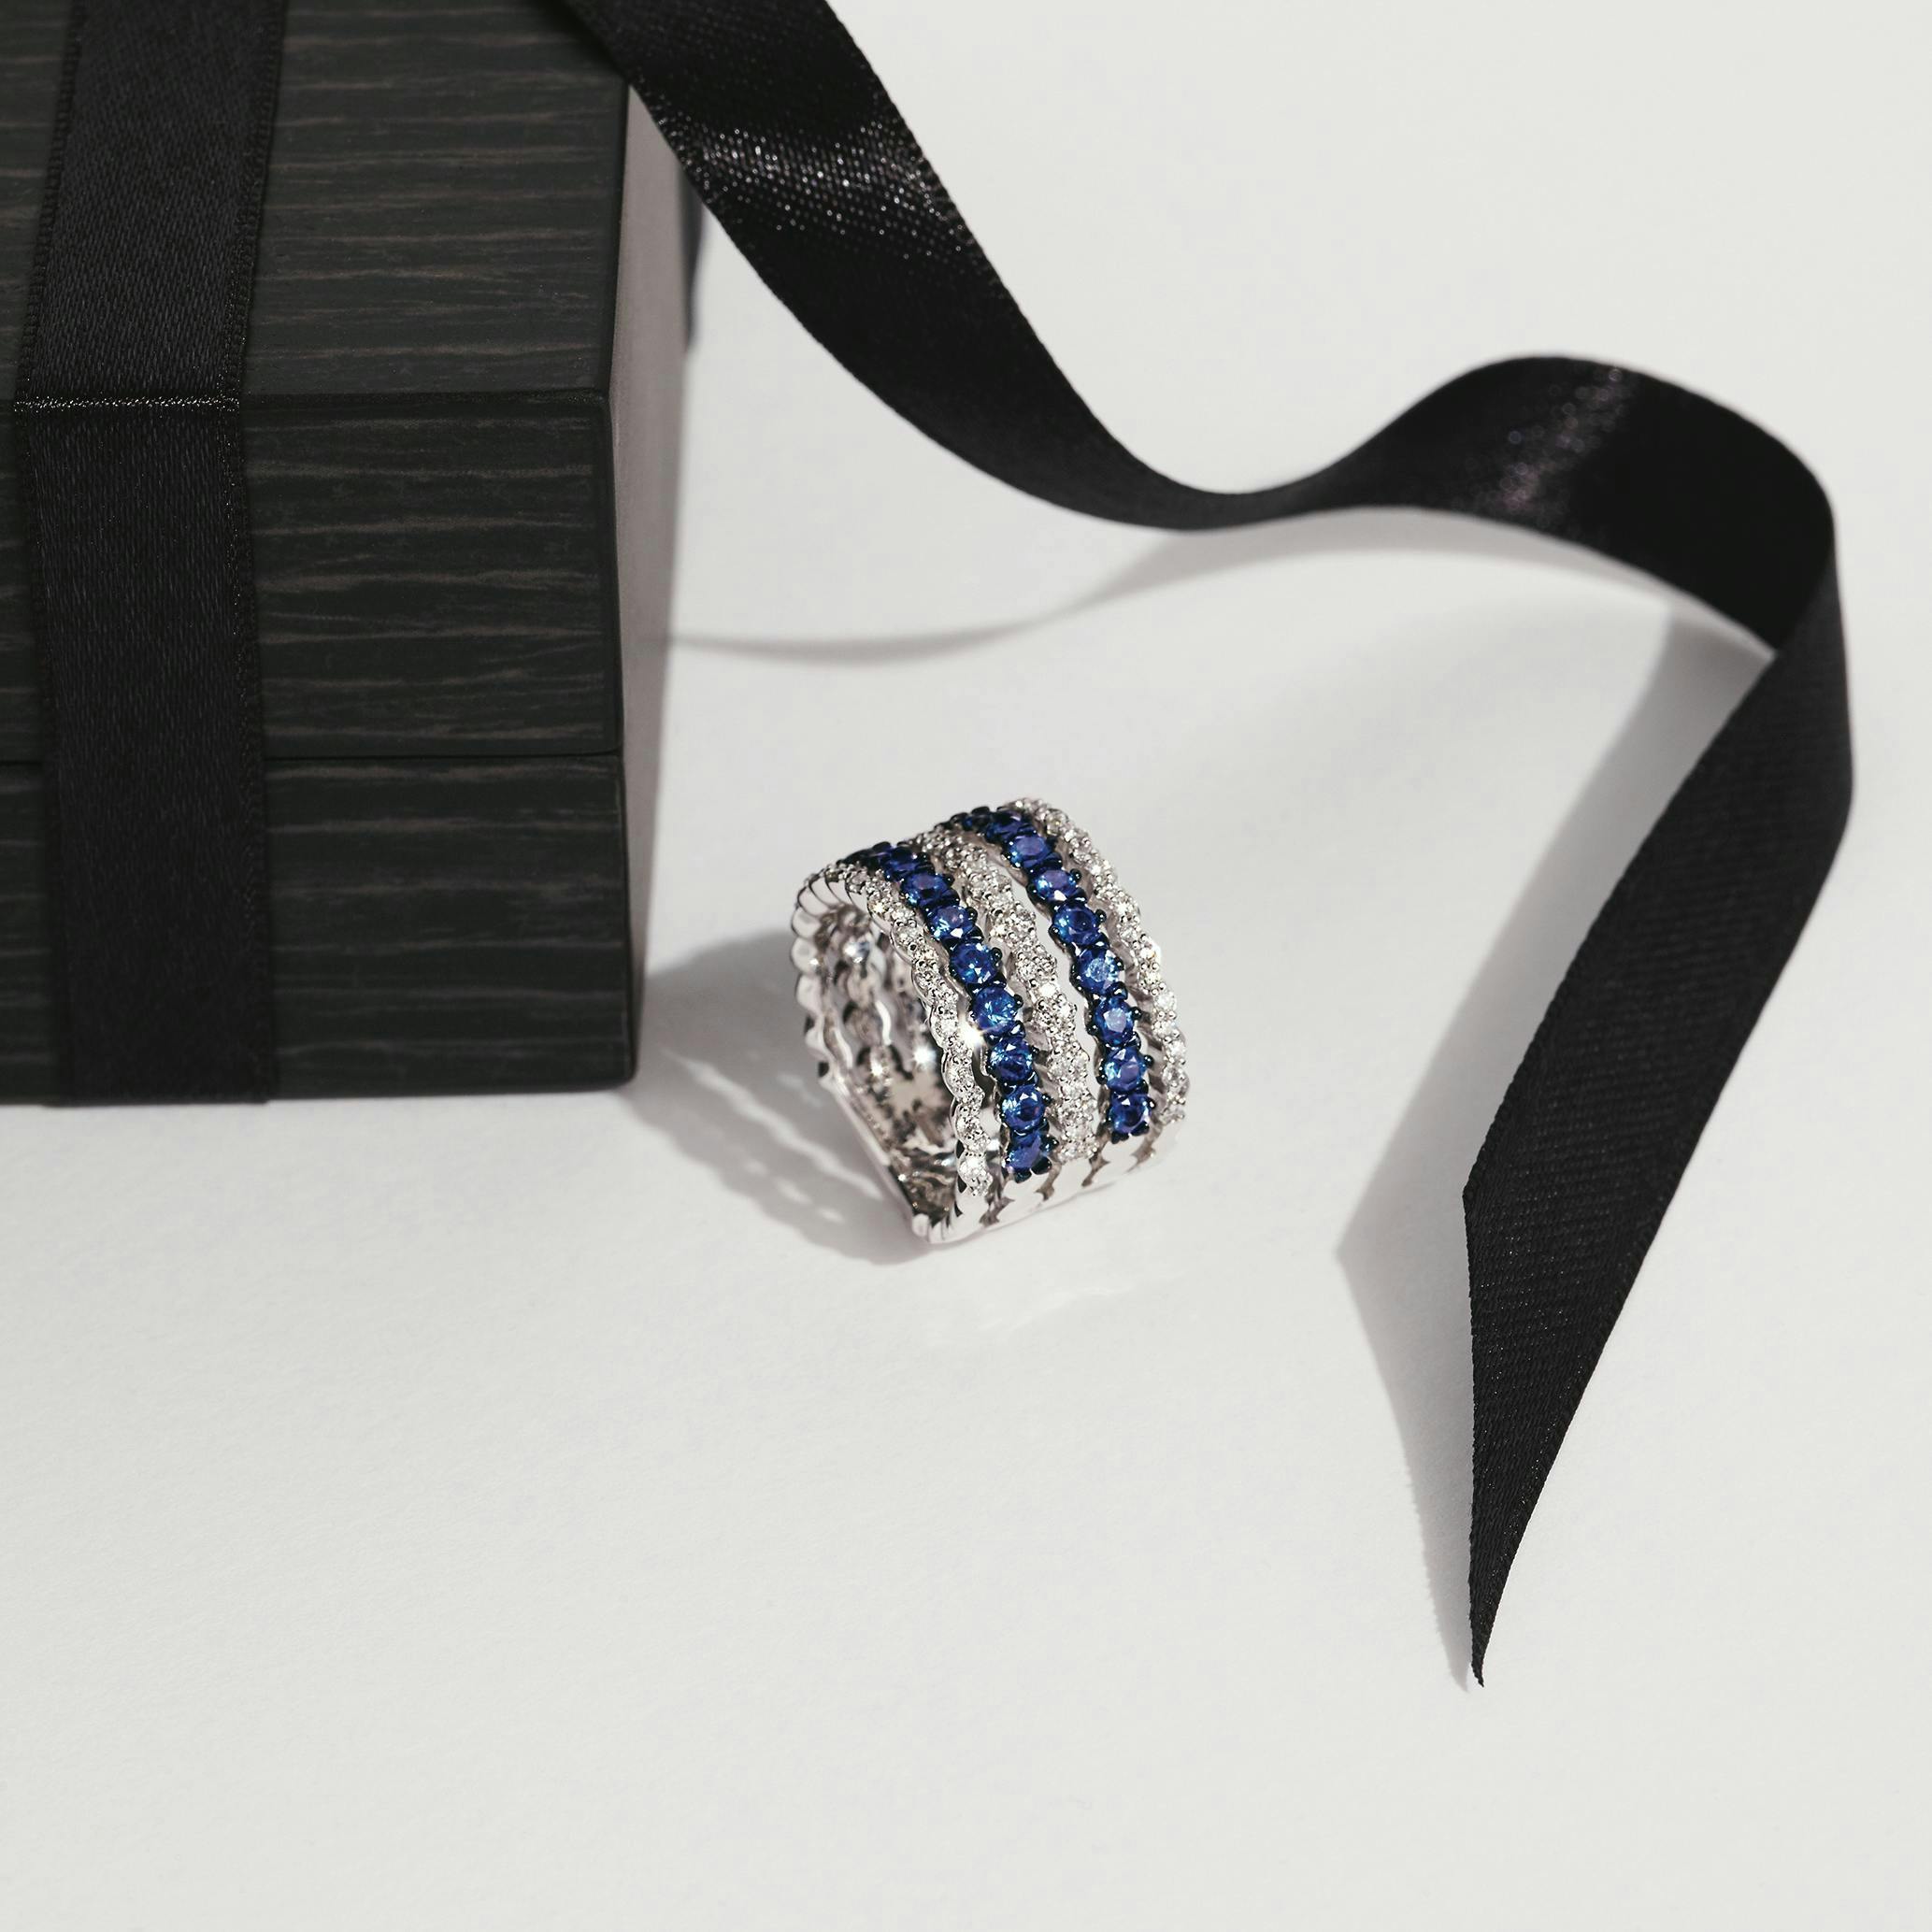 accessories diamond gemstone jewelry ring formal wear tie necklace